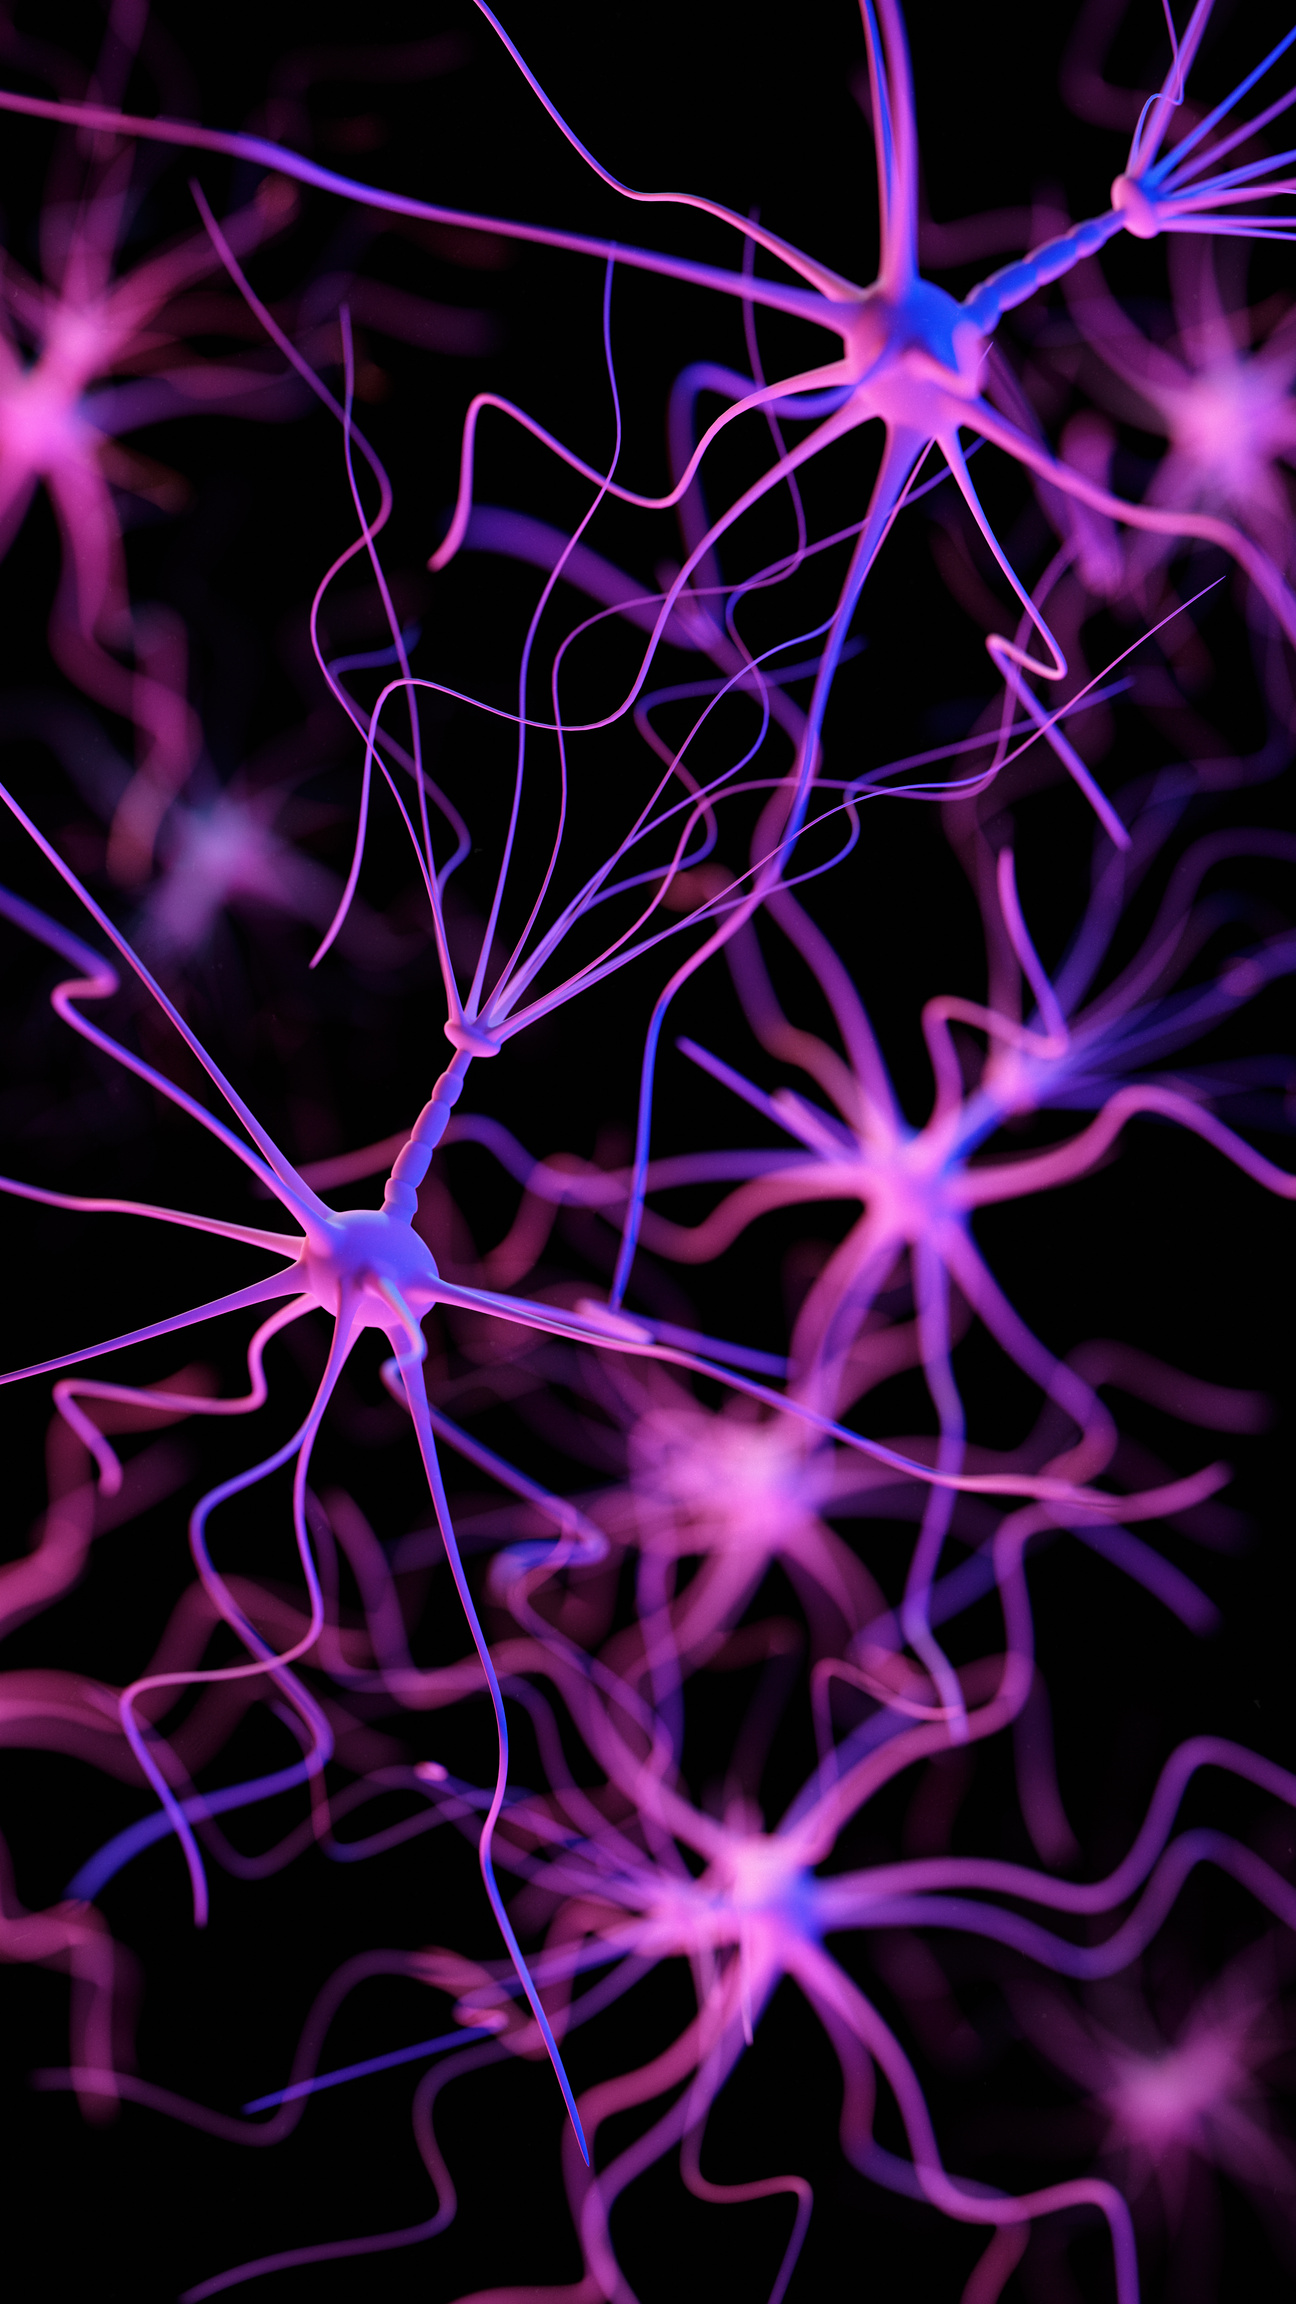 Neuron system